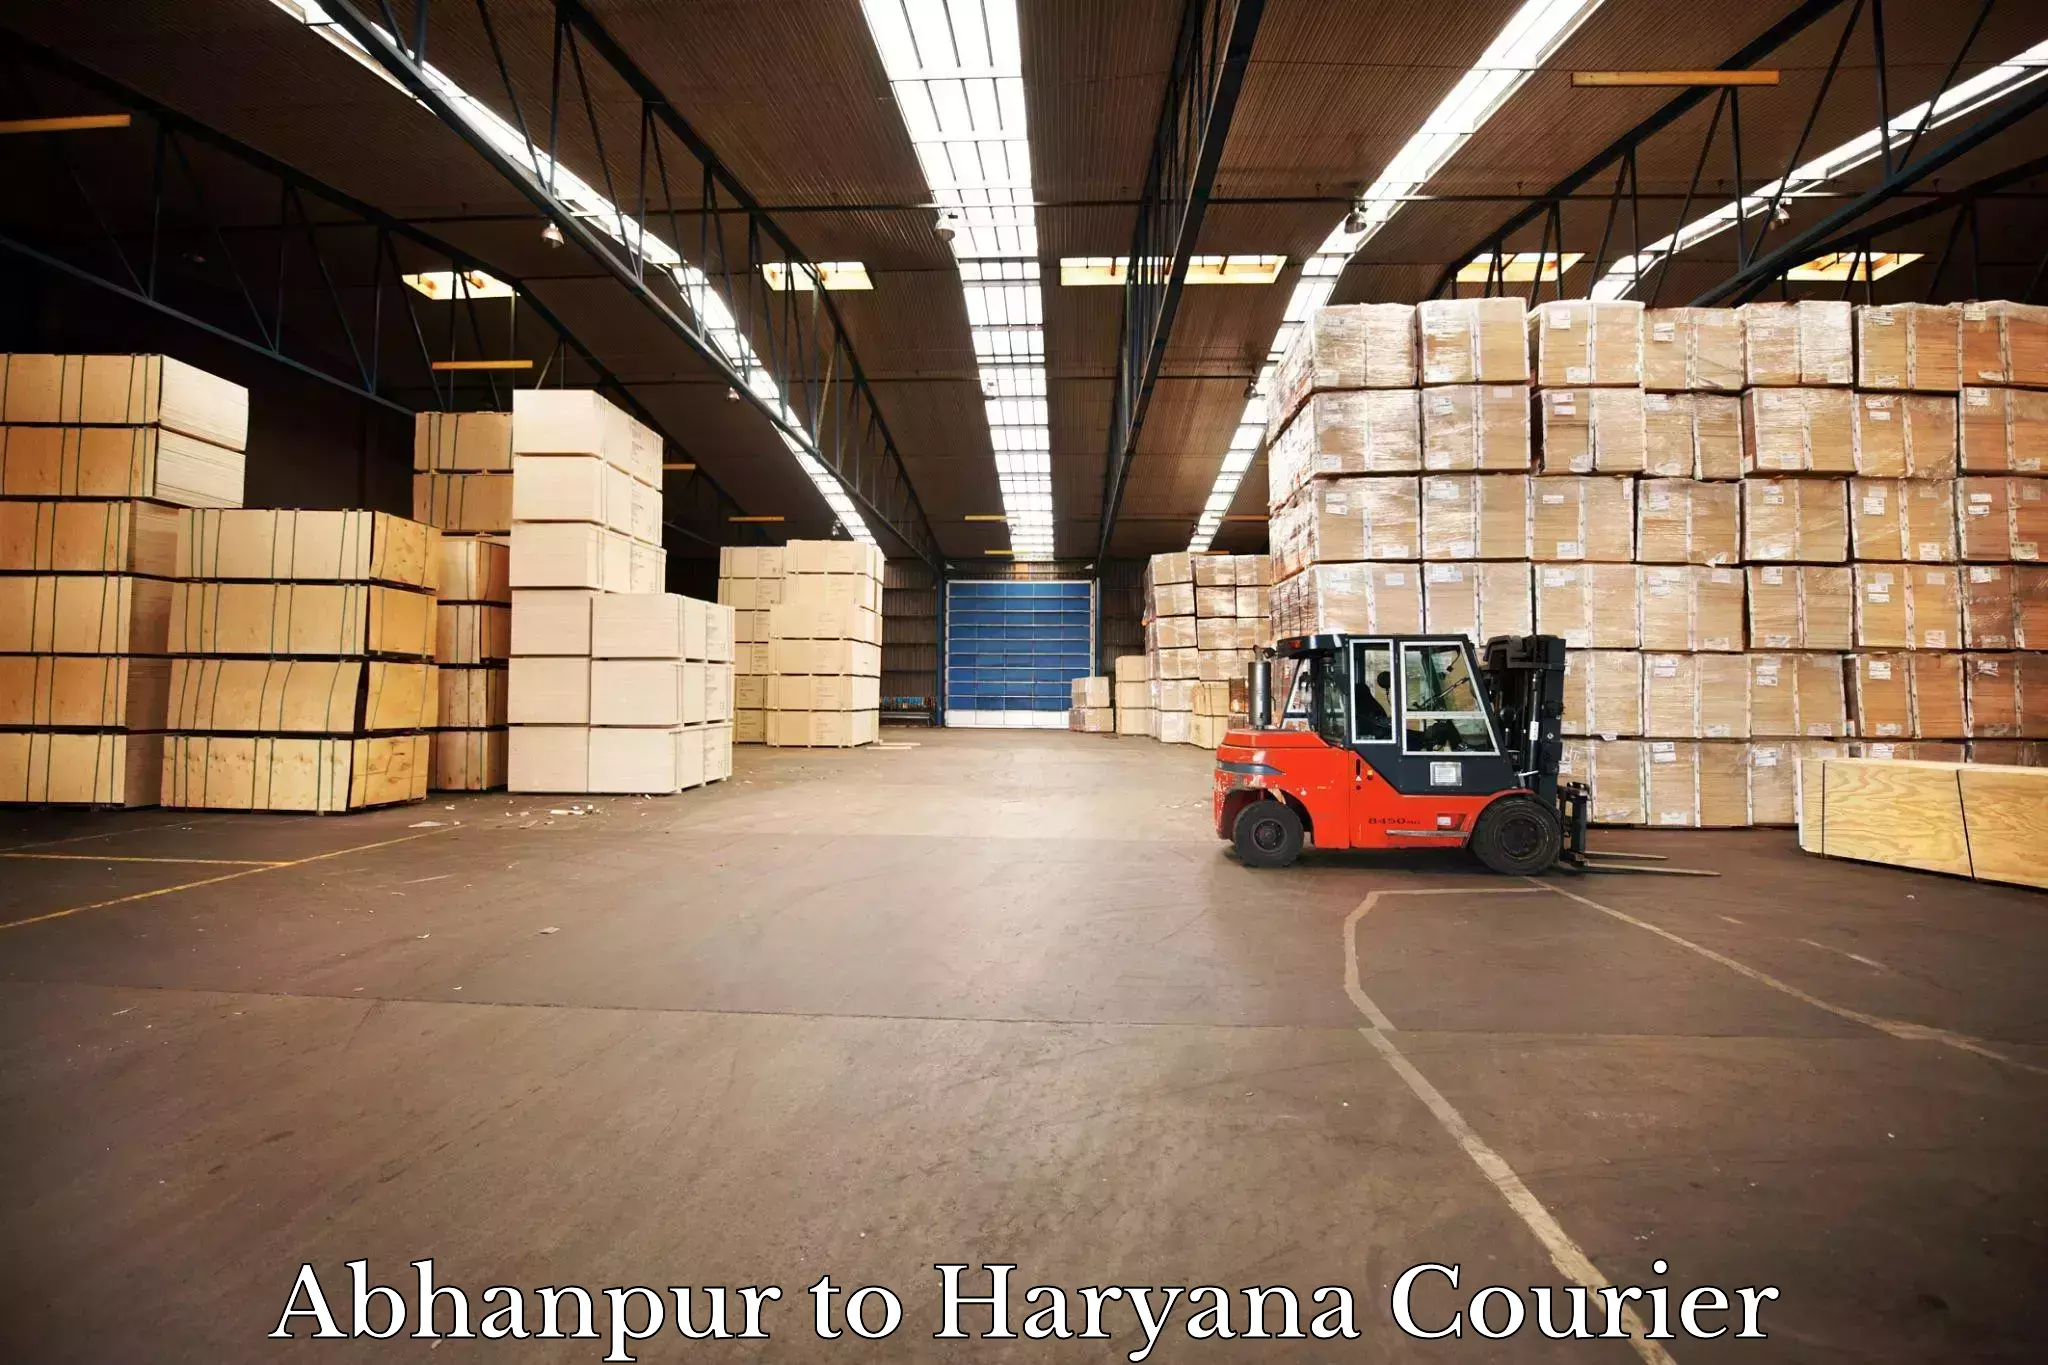 Digital courier platforms Abhanpur to Haryana